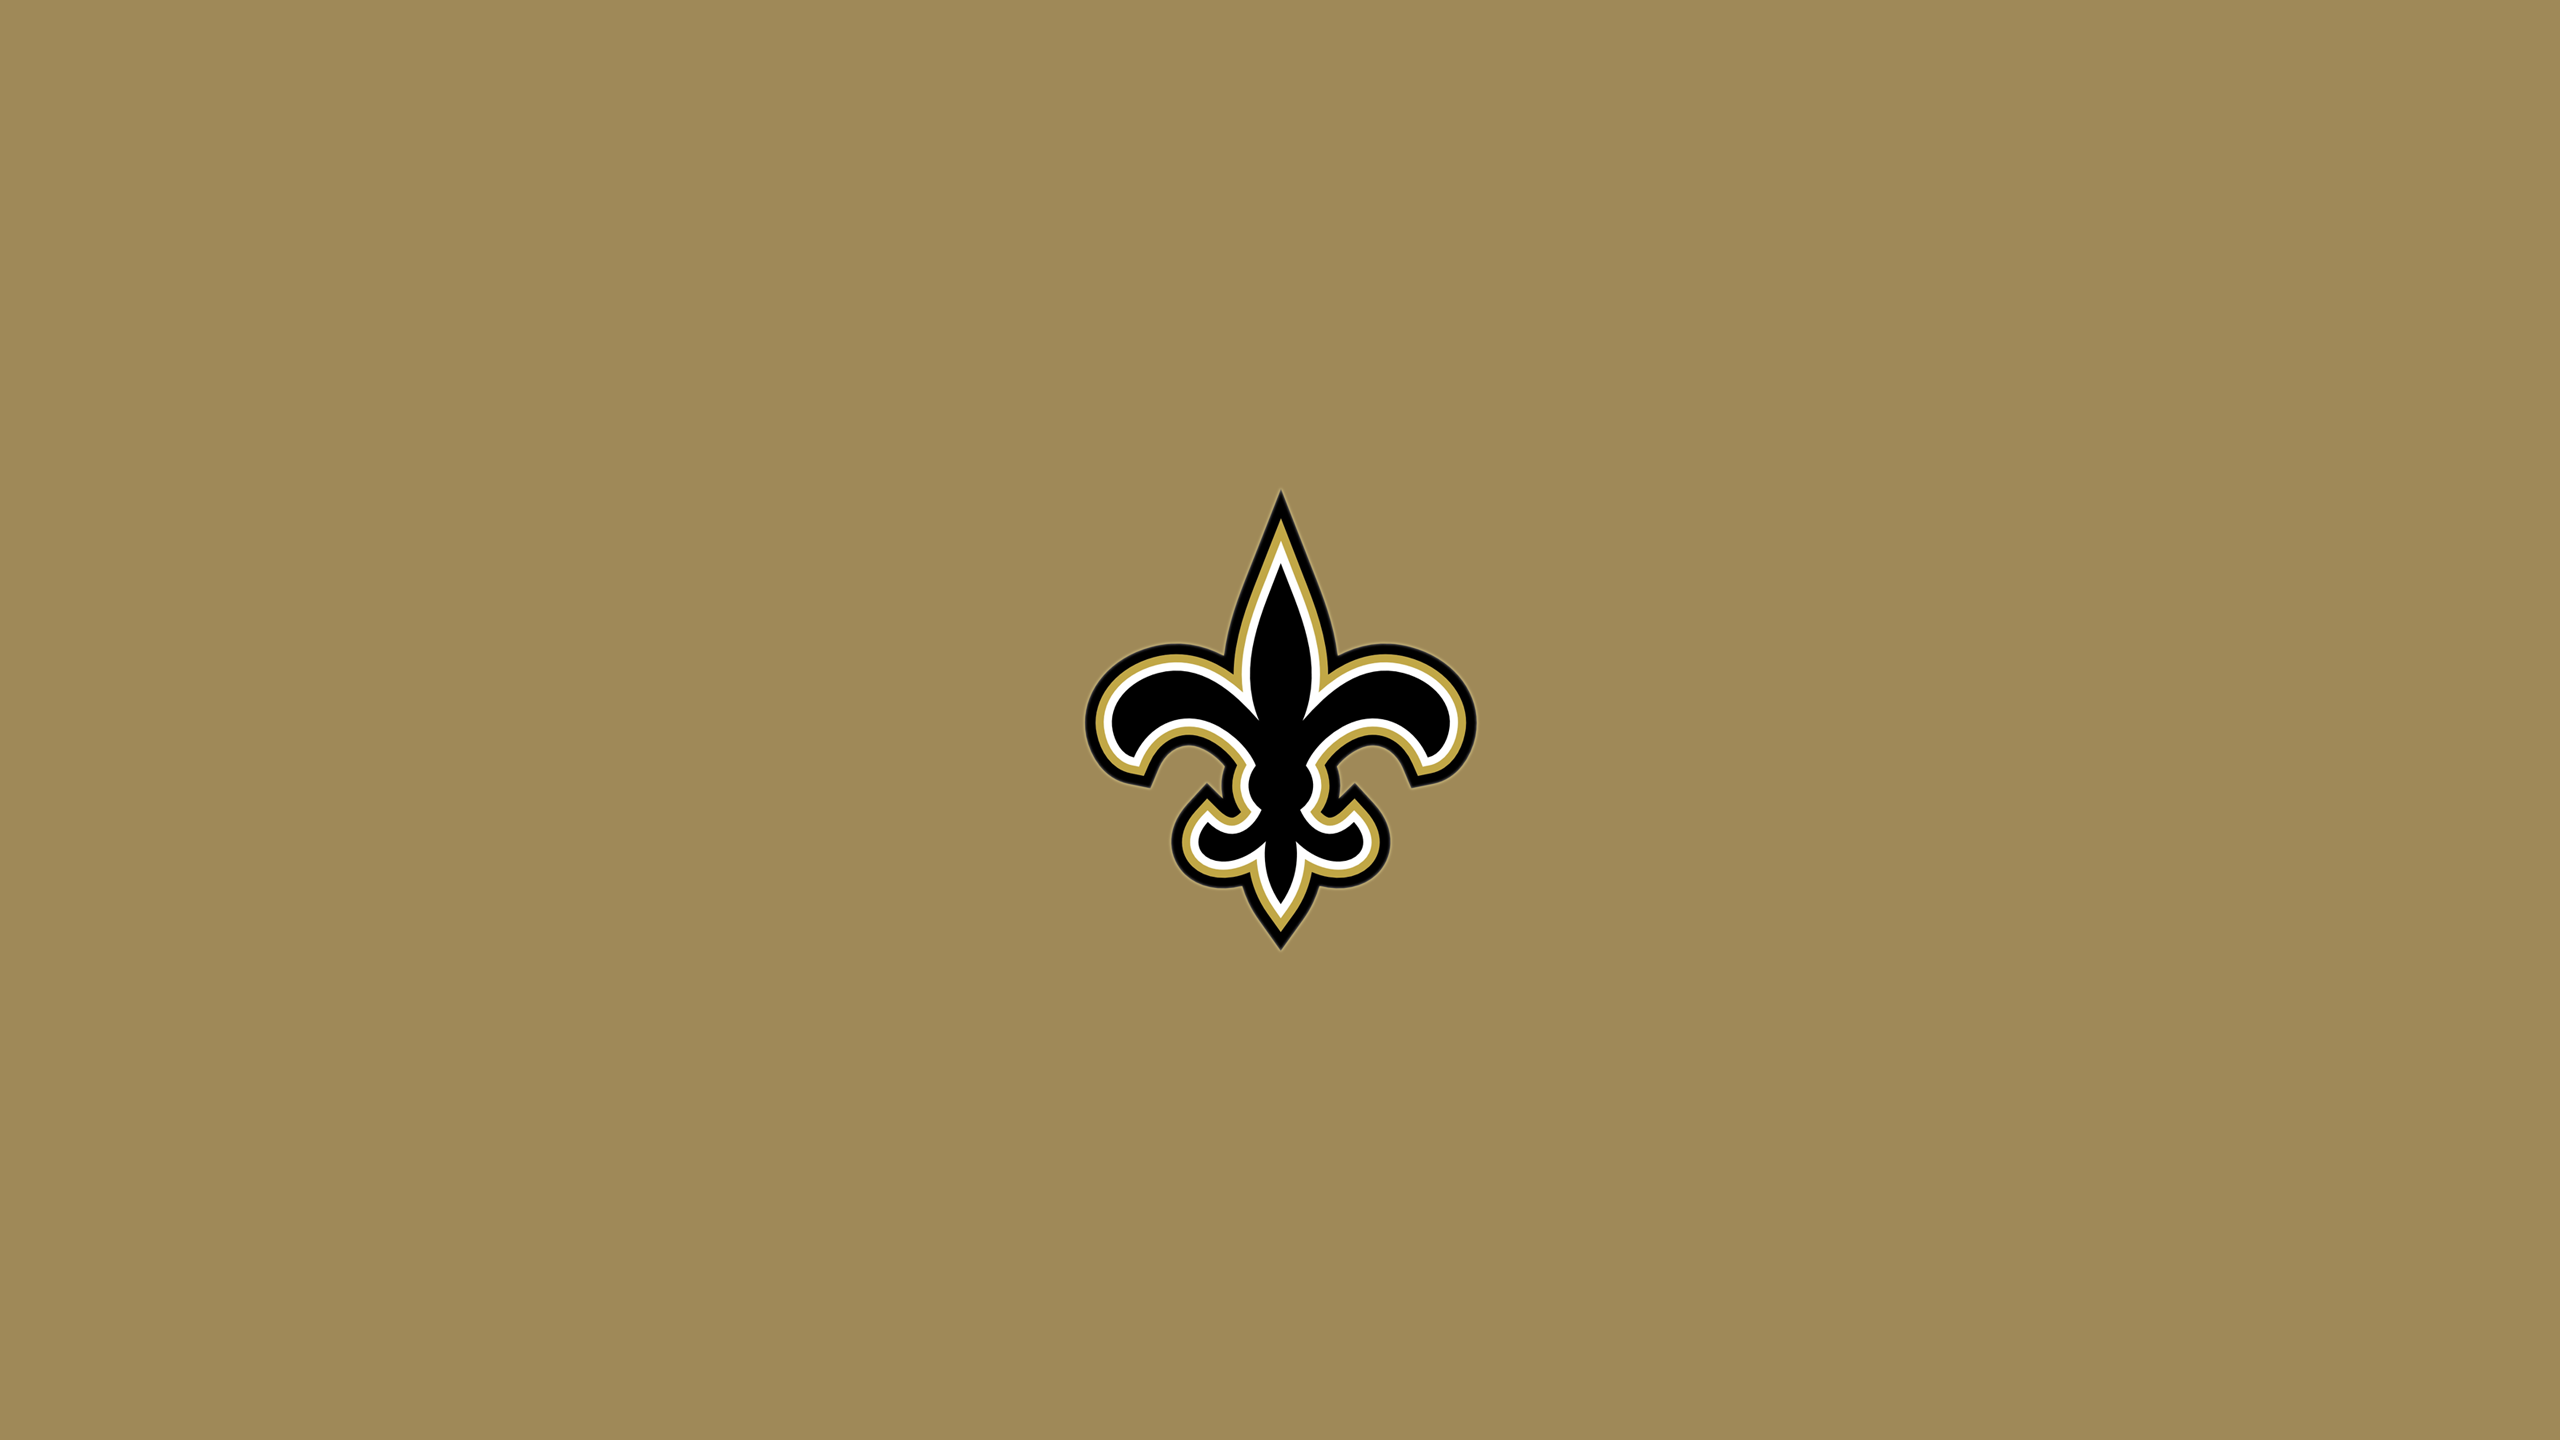 New Orleans Saints - NFL - Square Bettor